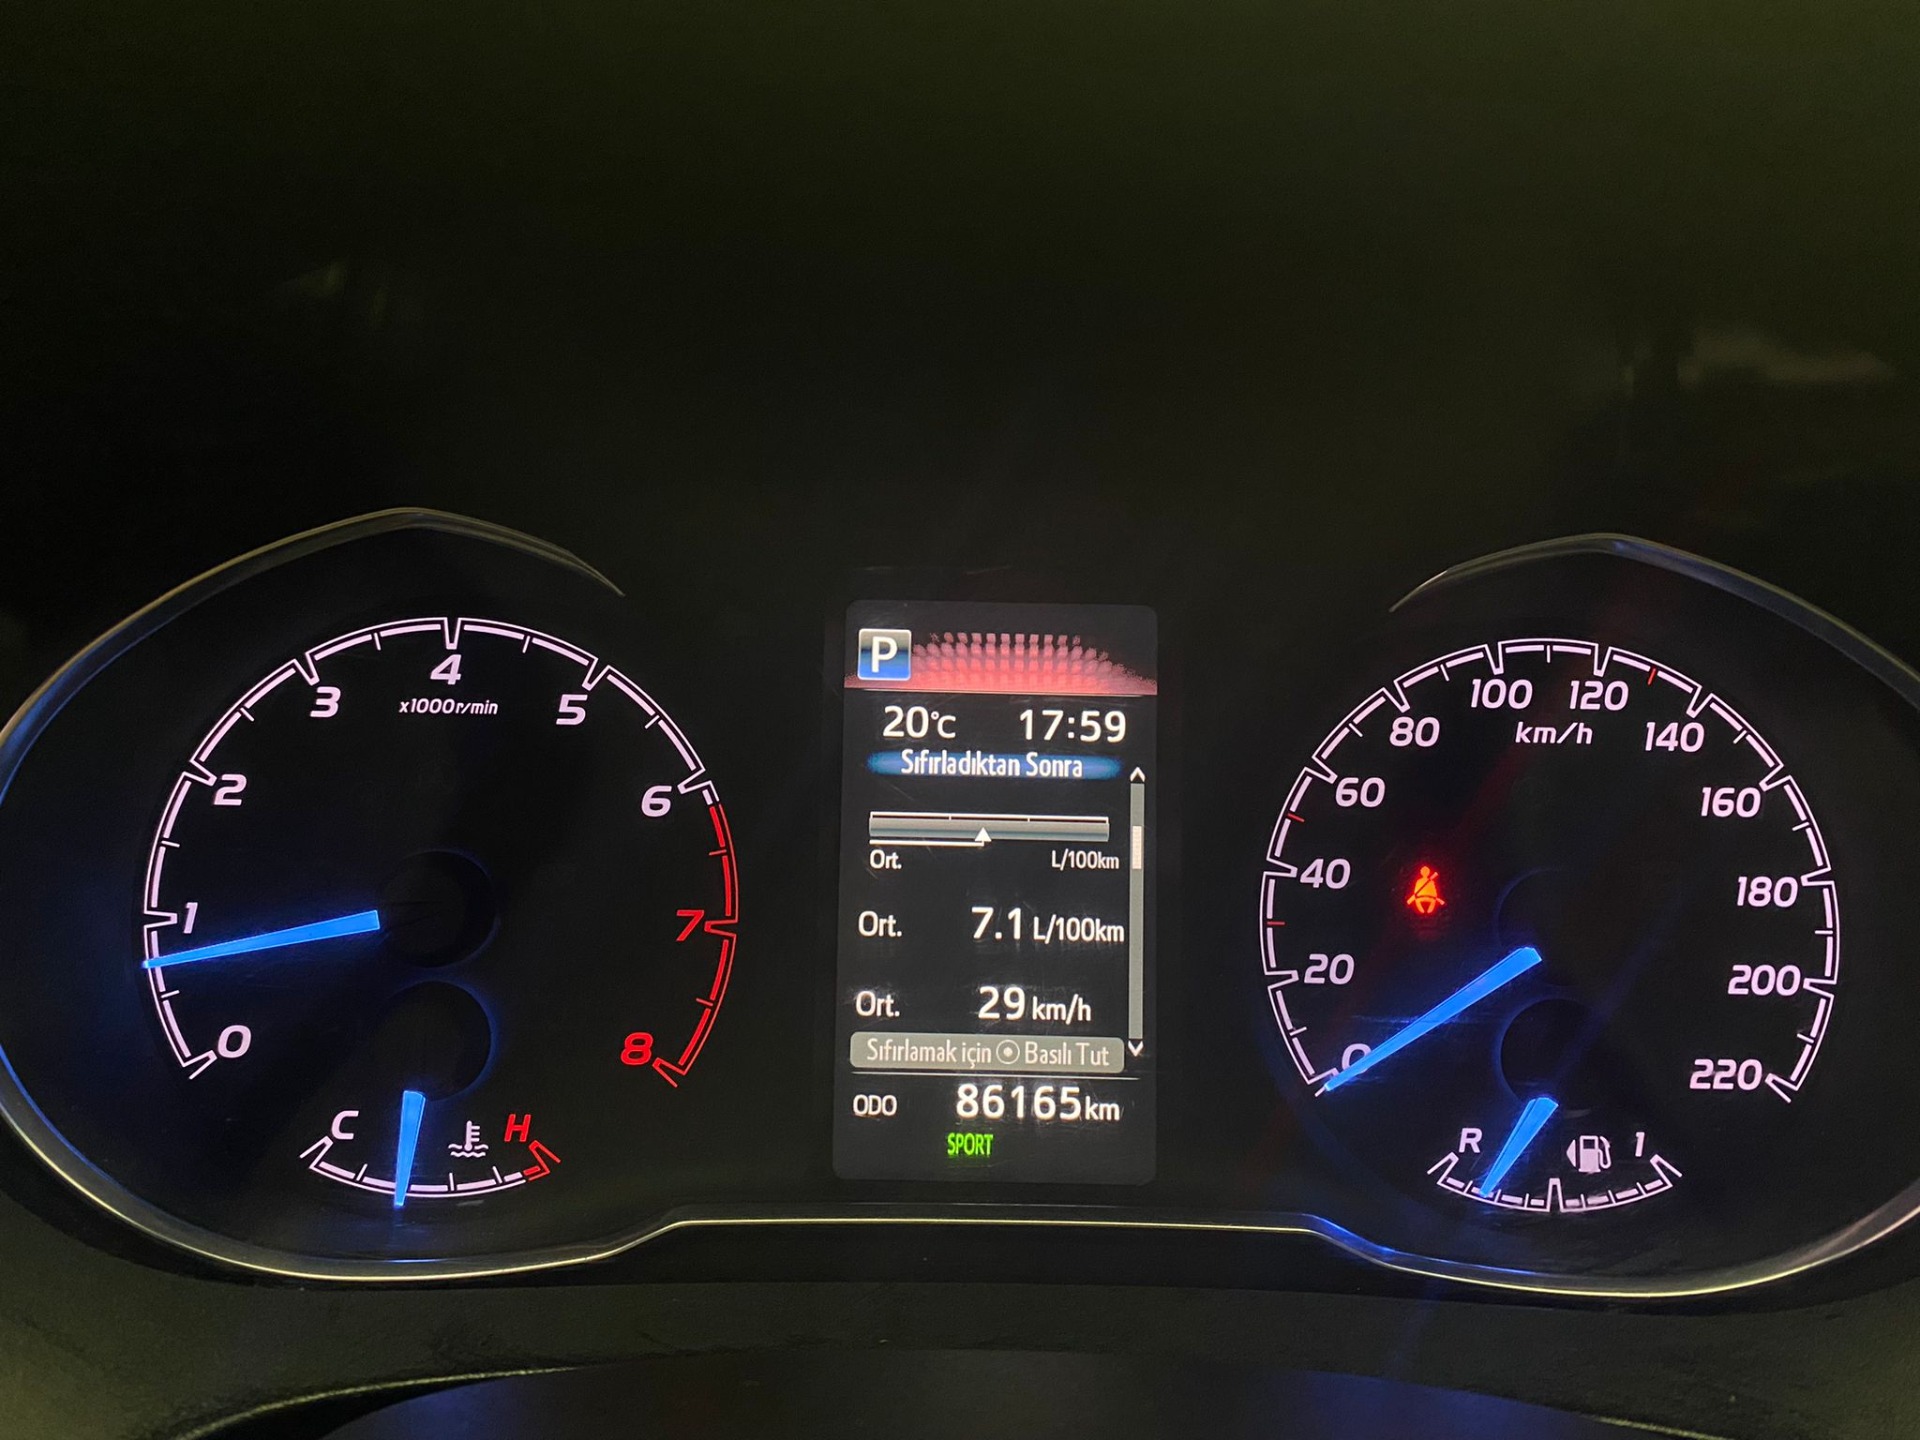 2017 Model Toyota Yaris 1.5 Fun Special Multidrive S-20